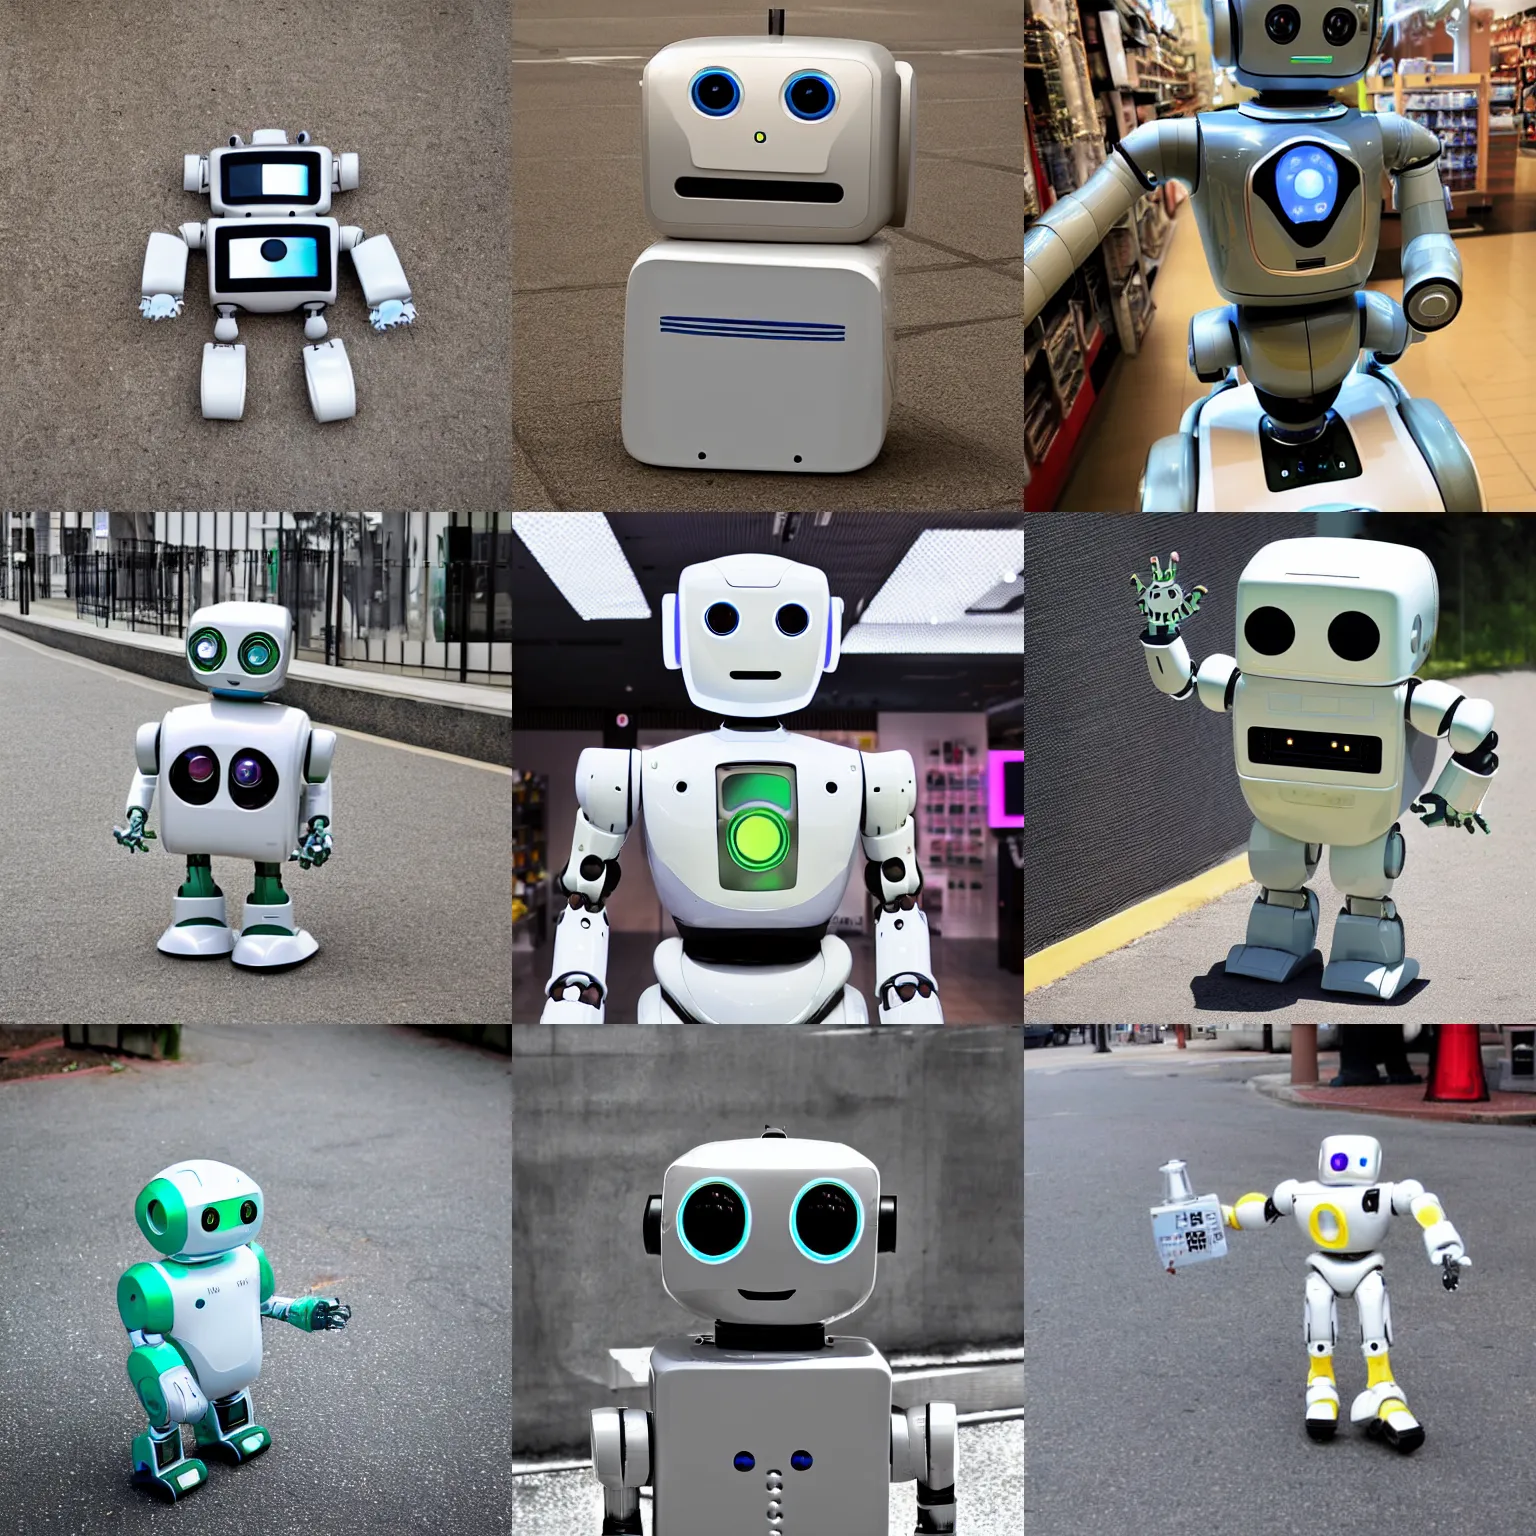 Prompt: <photograph robot='friendly adorable' robot-origin='futuristic robot store'>Cute Robot Wants You To Pick It Up</photograph>